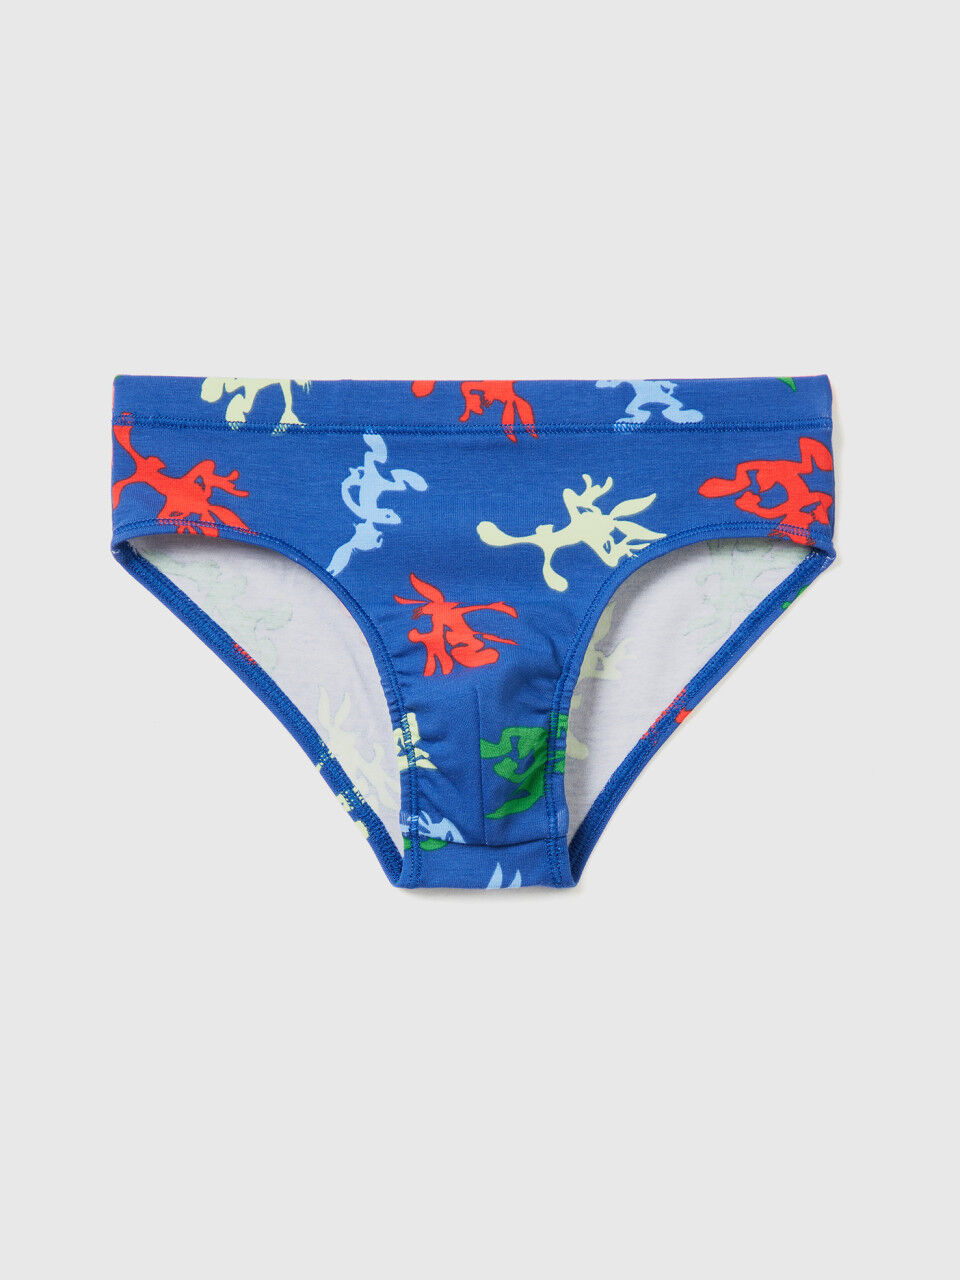 Bugs Bunny underwear